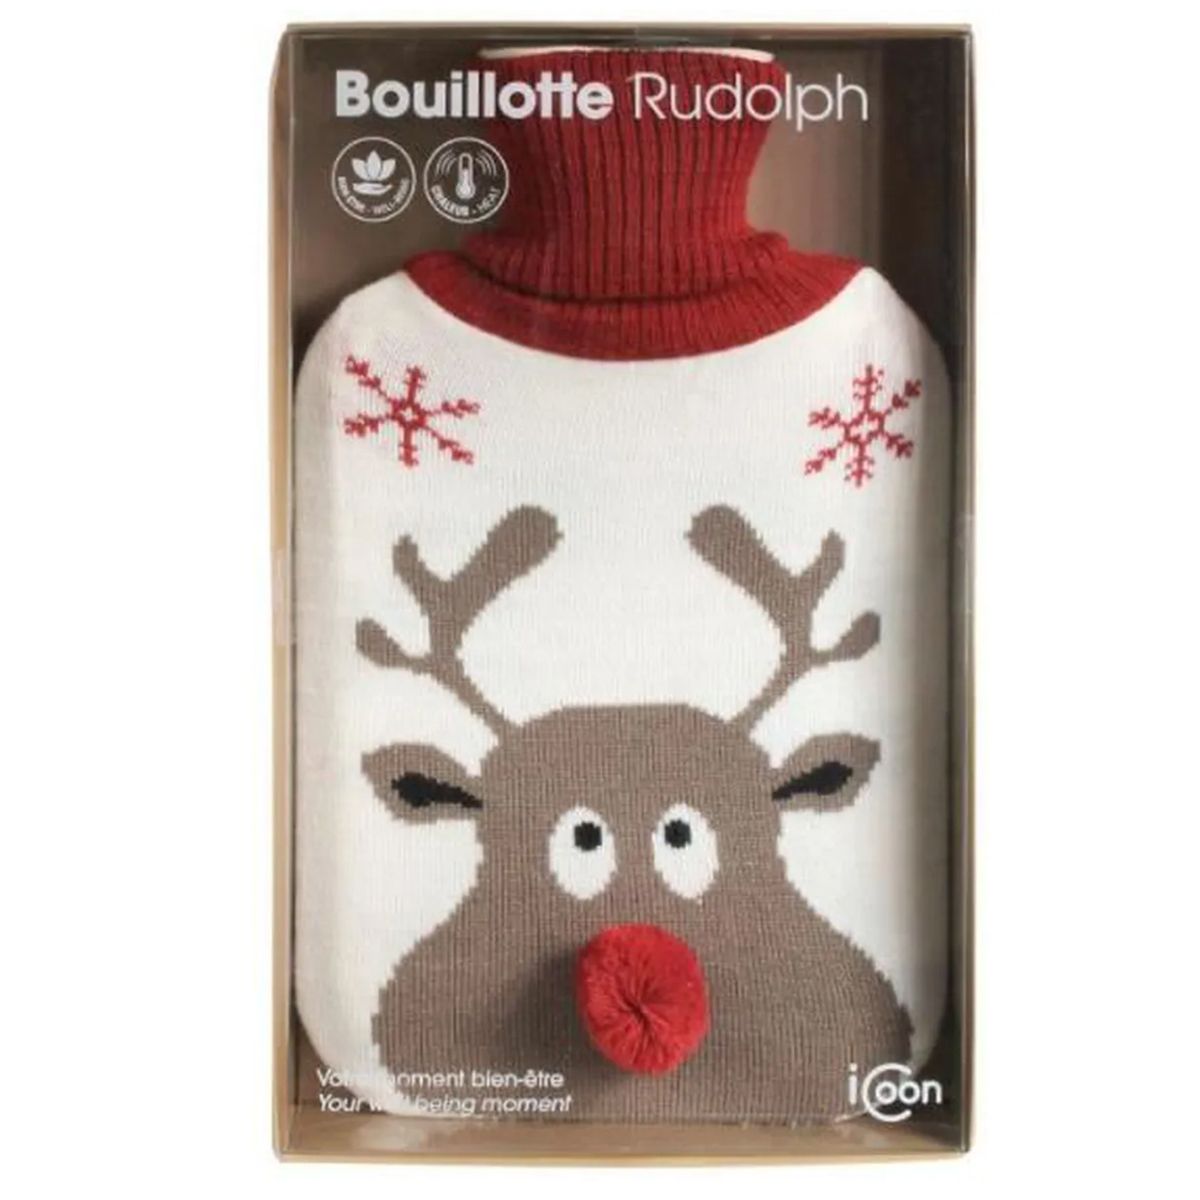 Bouillotte Rudolph